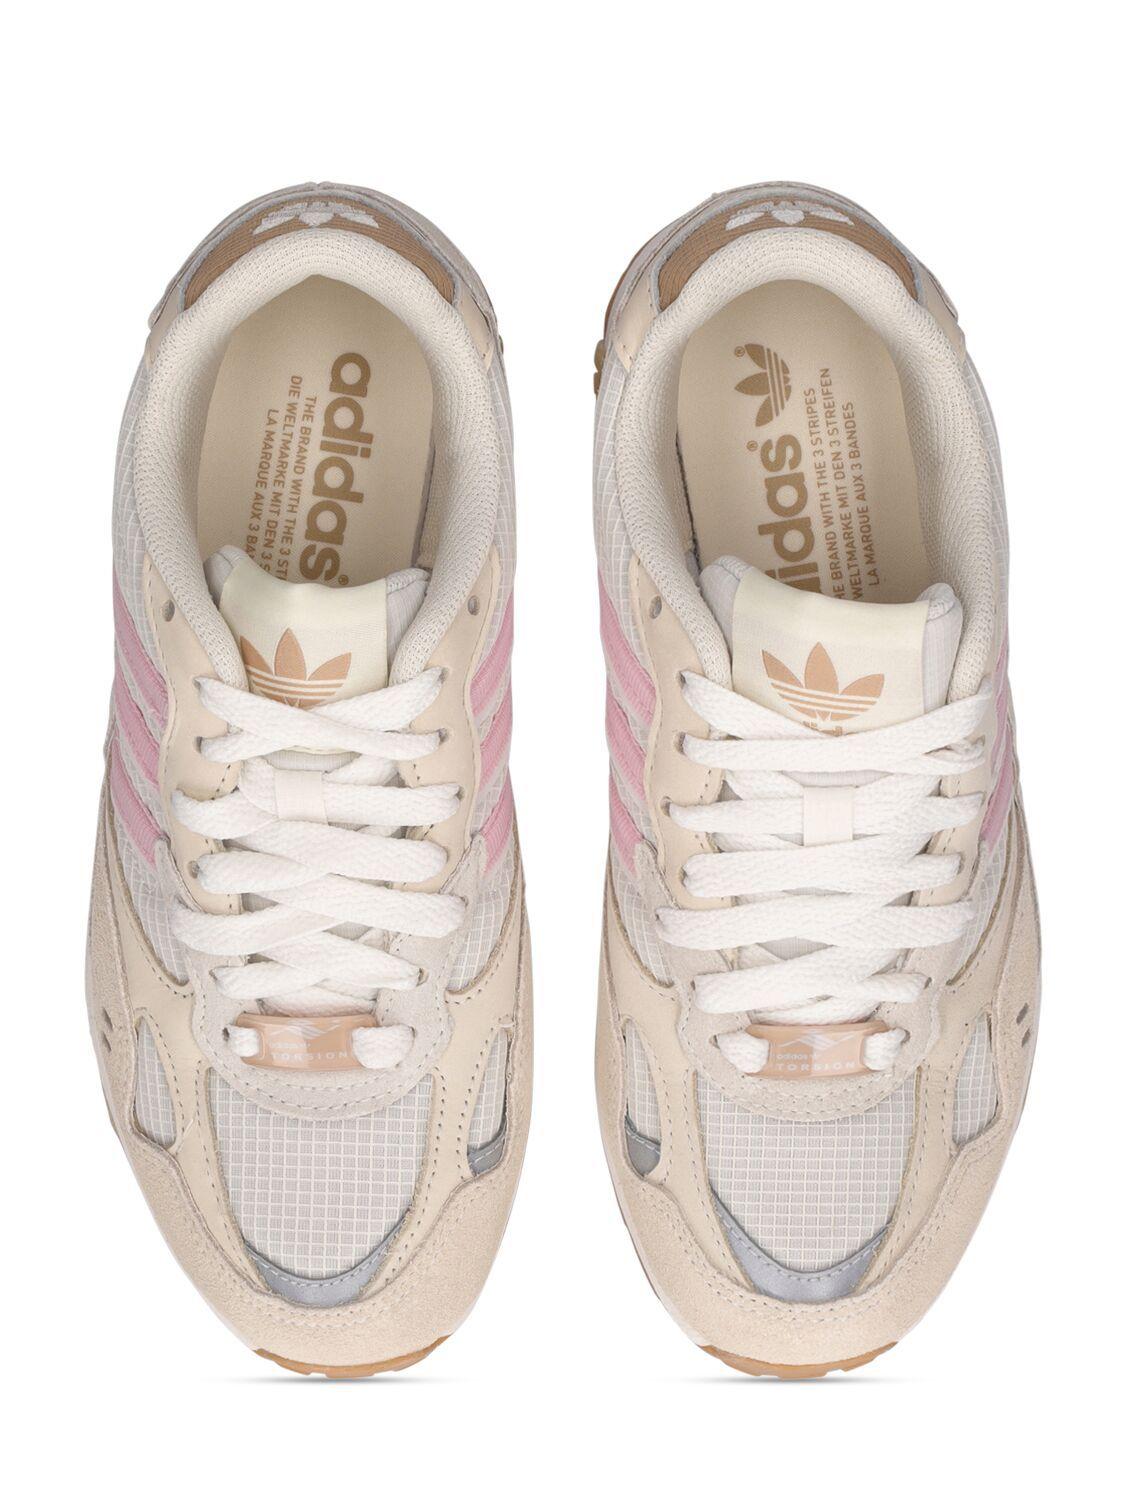 adidas Originals Torsion Super Sneakers in Pink | Lyst